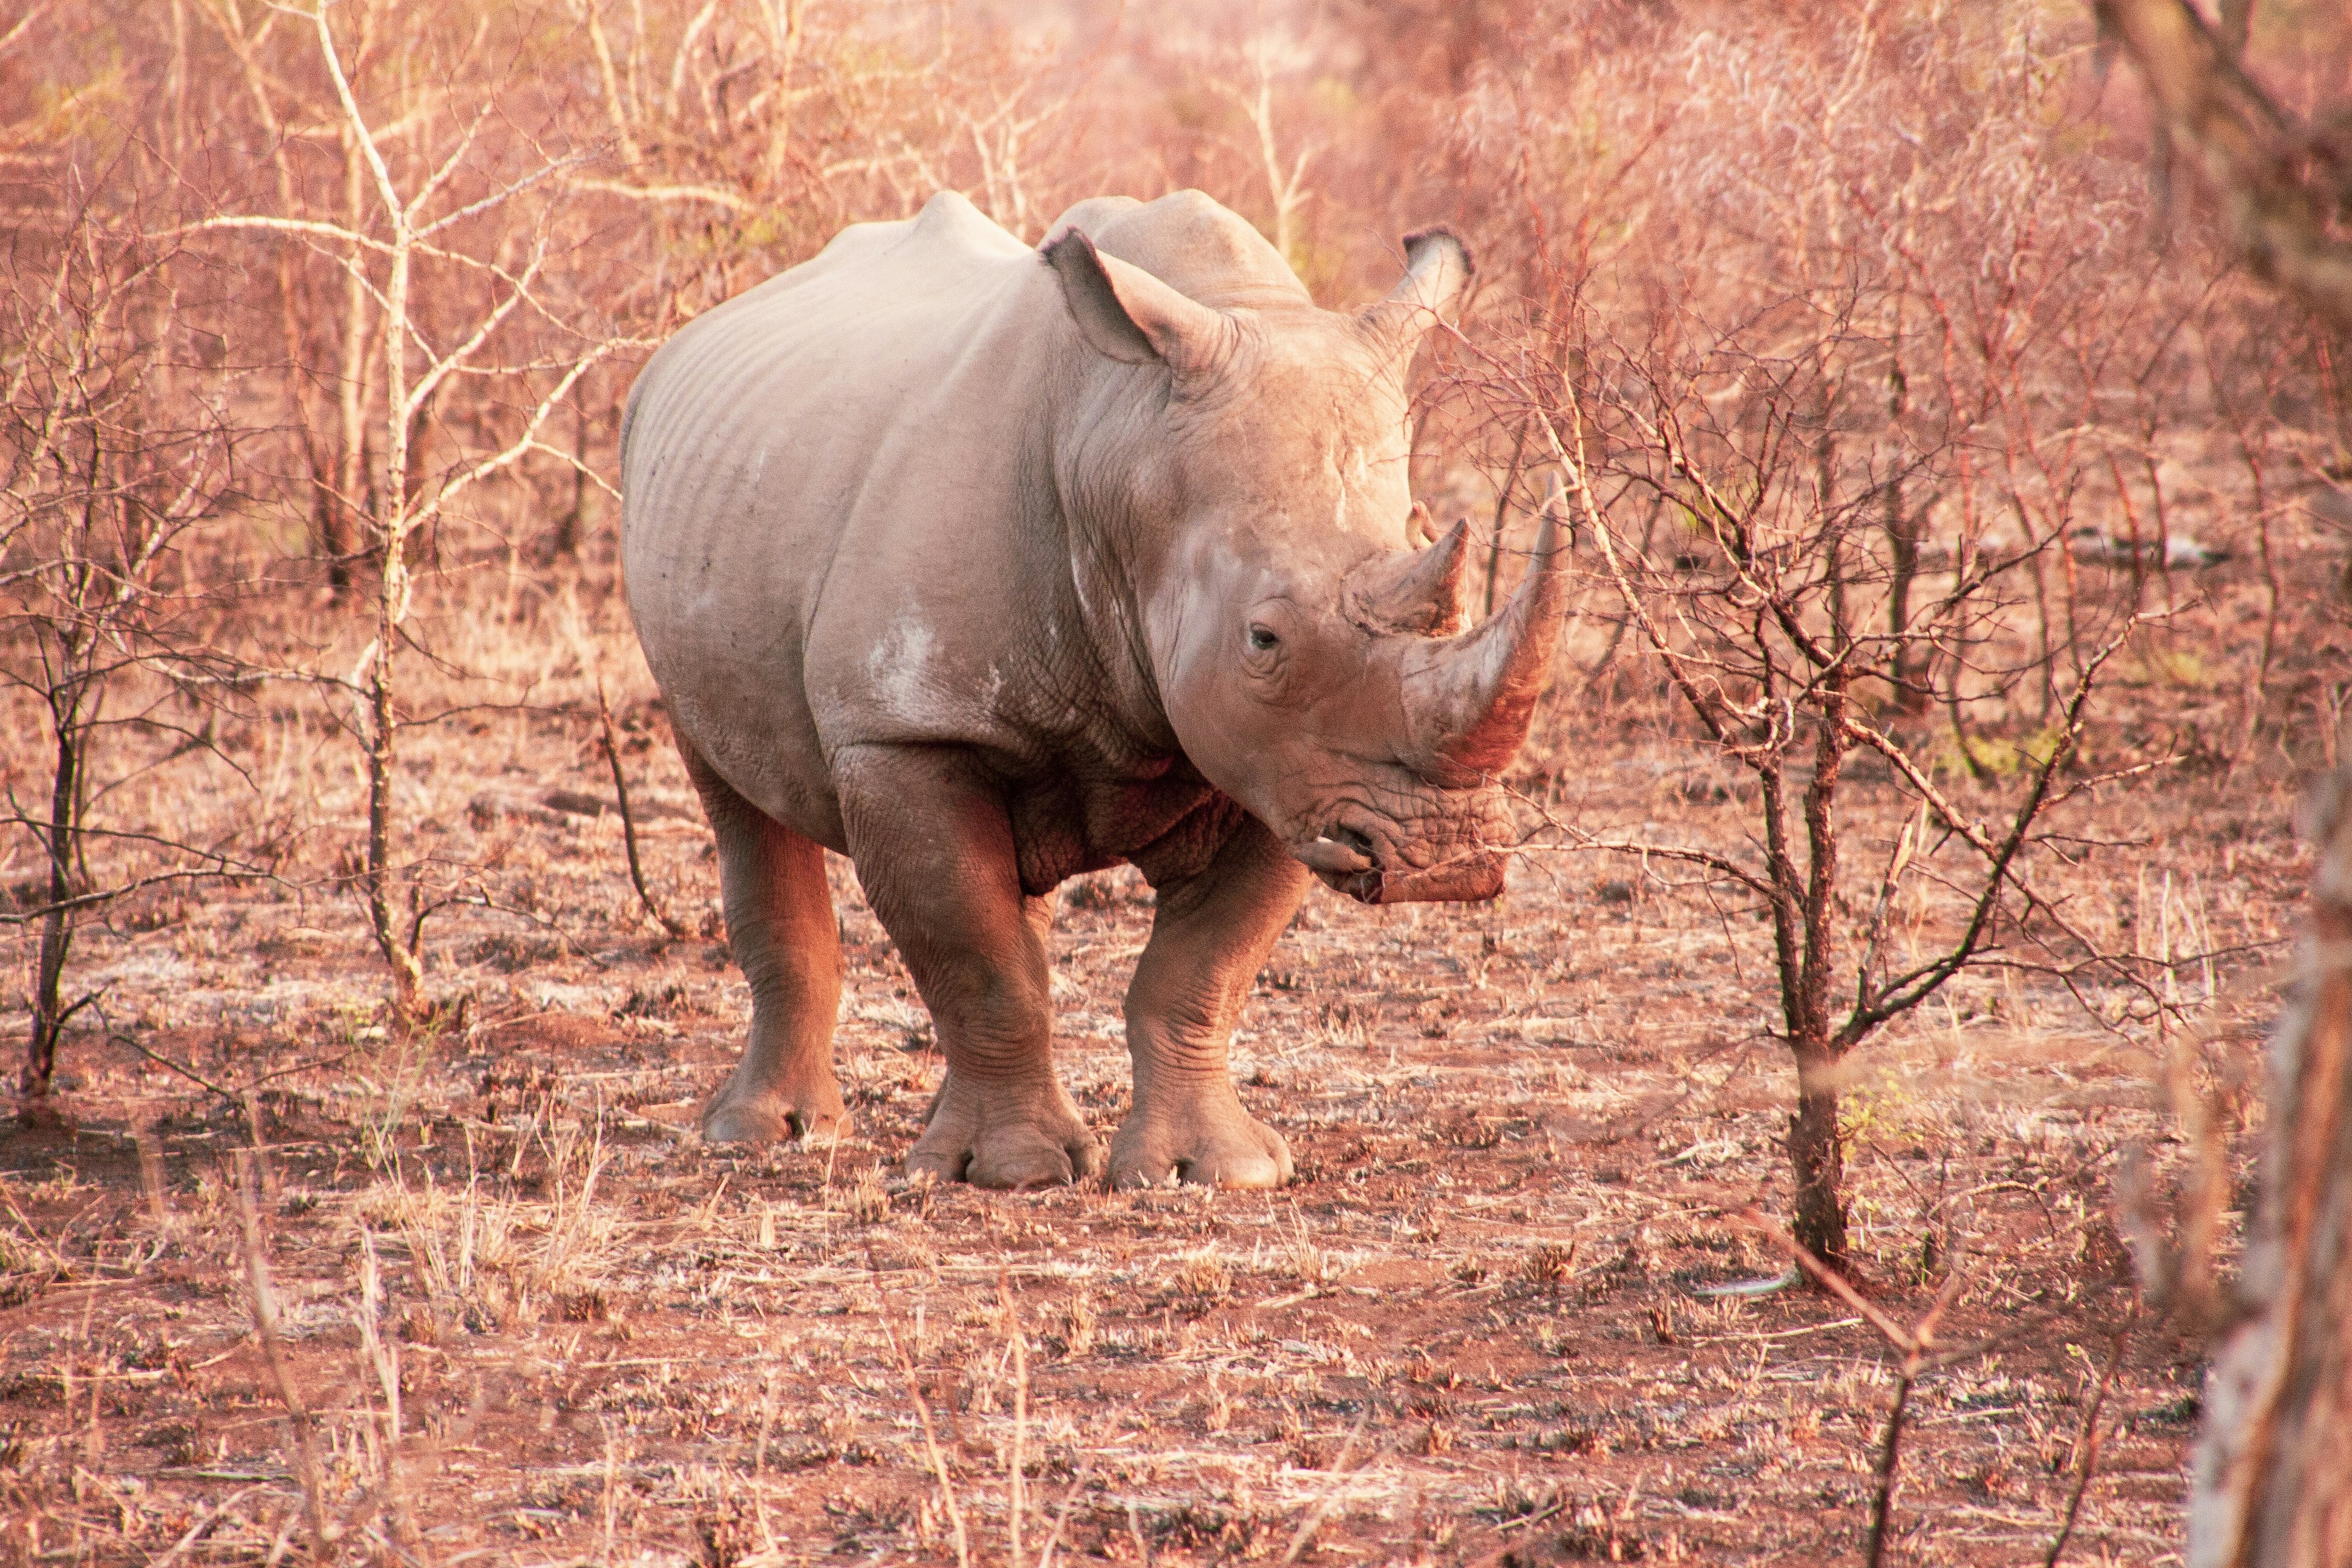 brown rhinoceros on brown grass field during daytime